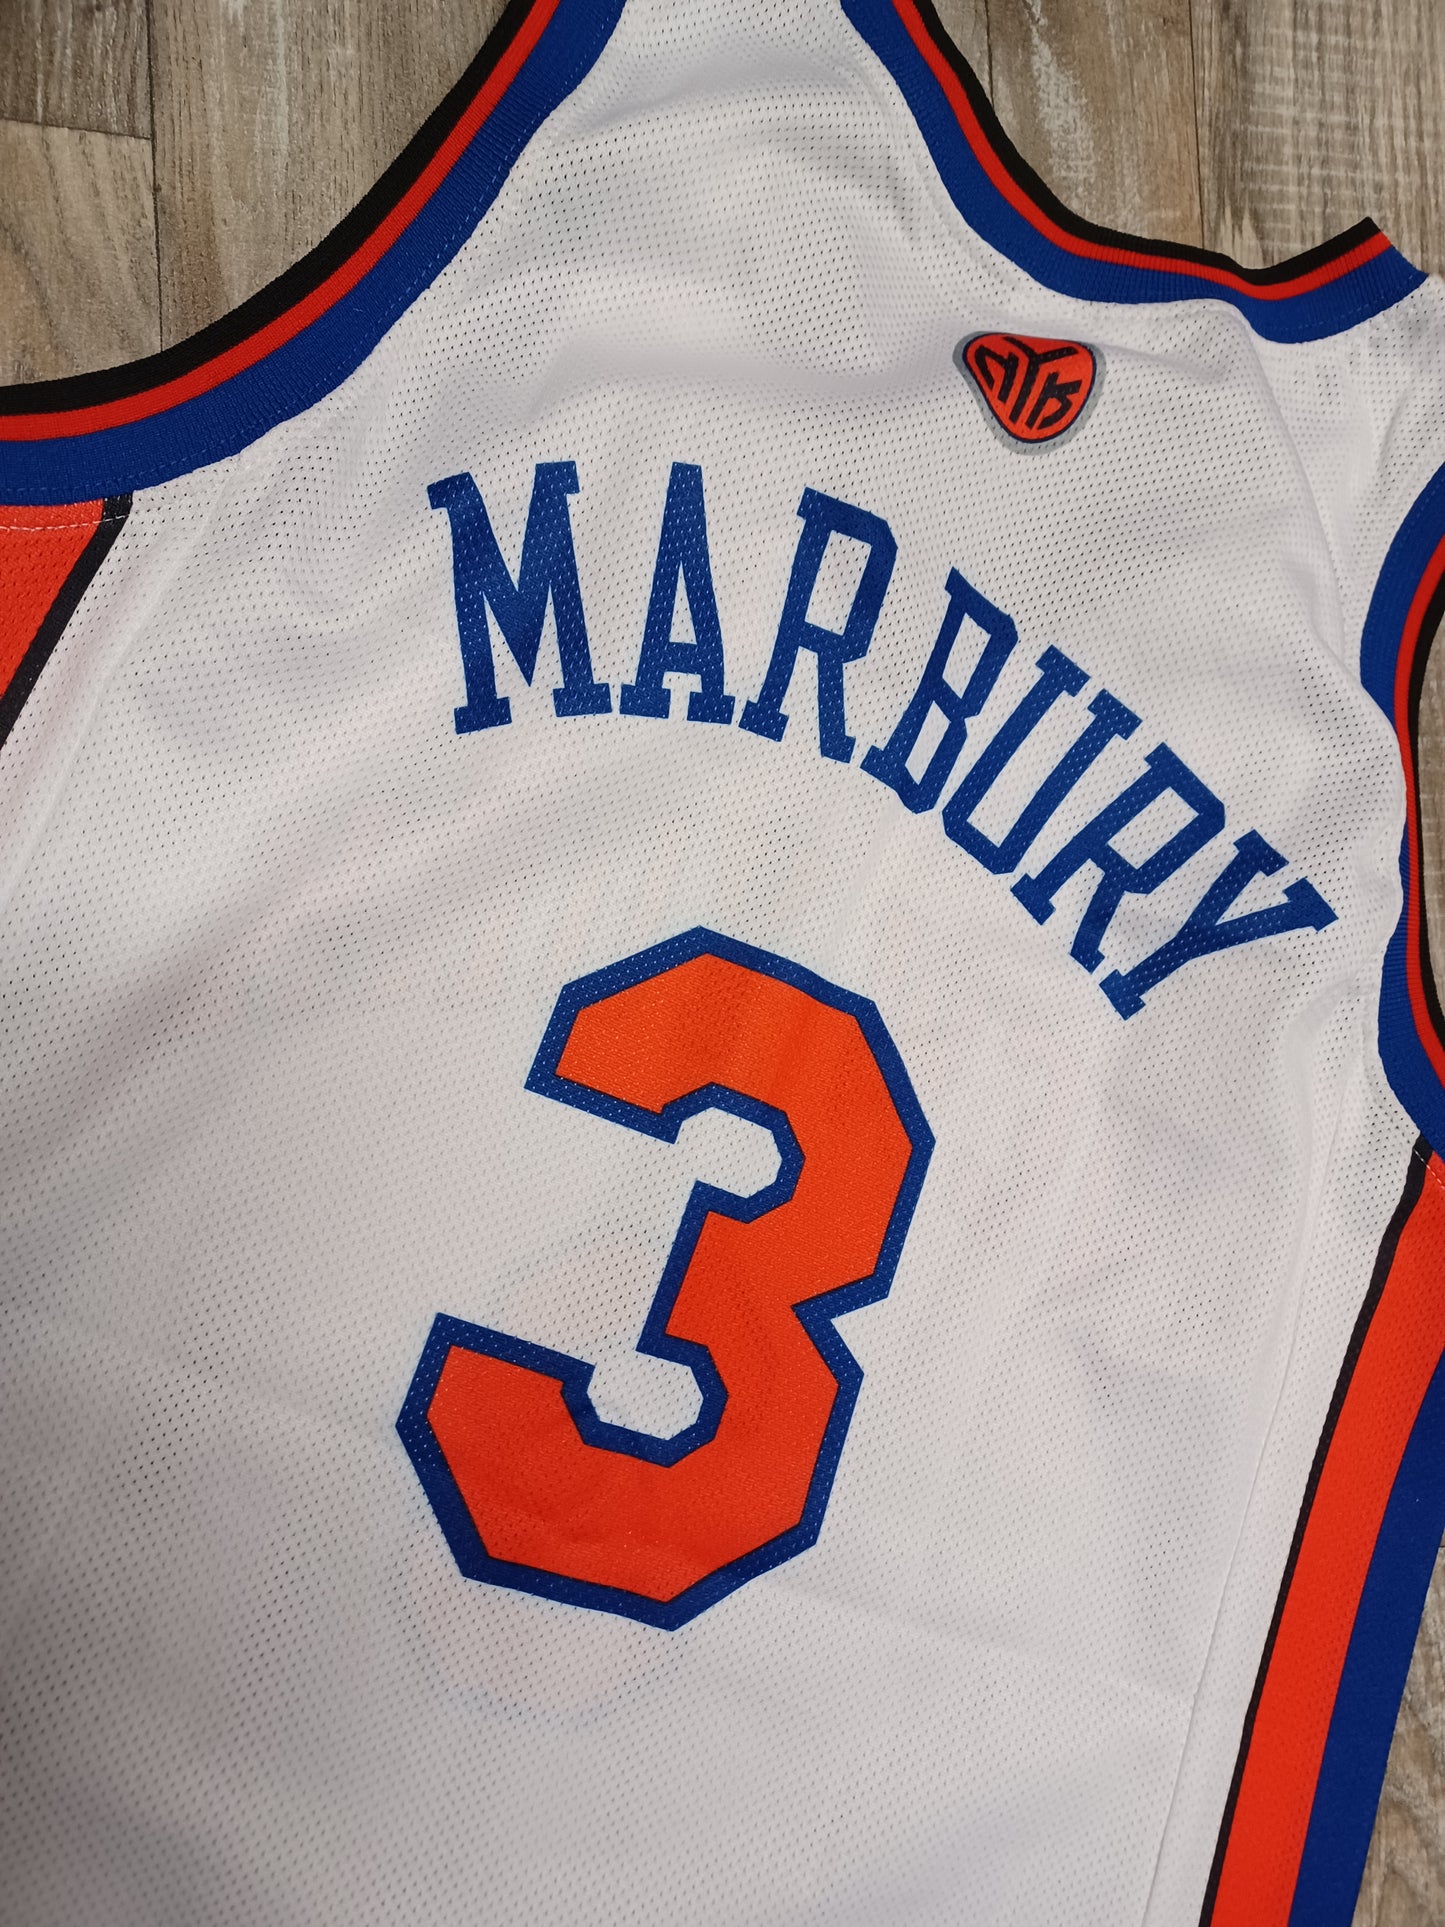 Stephon Marbury New York Knicks Jersey Size Medium